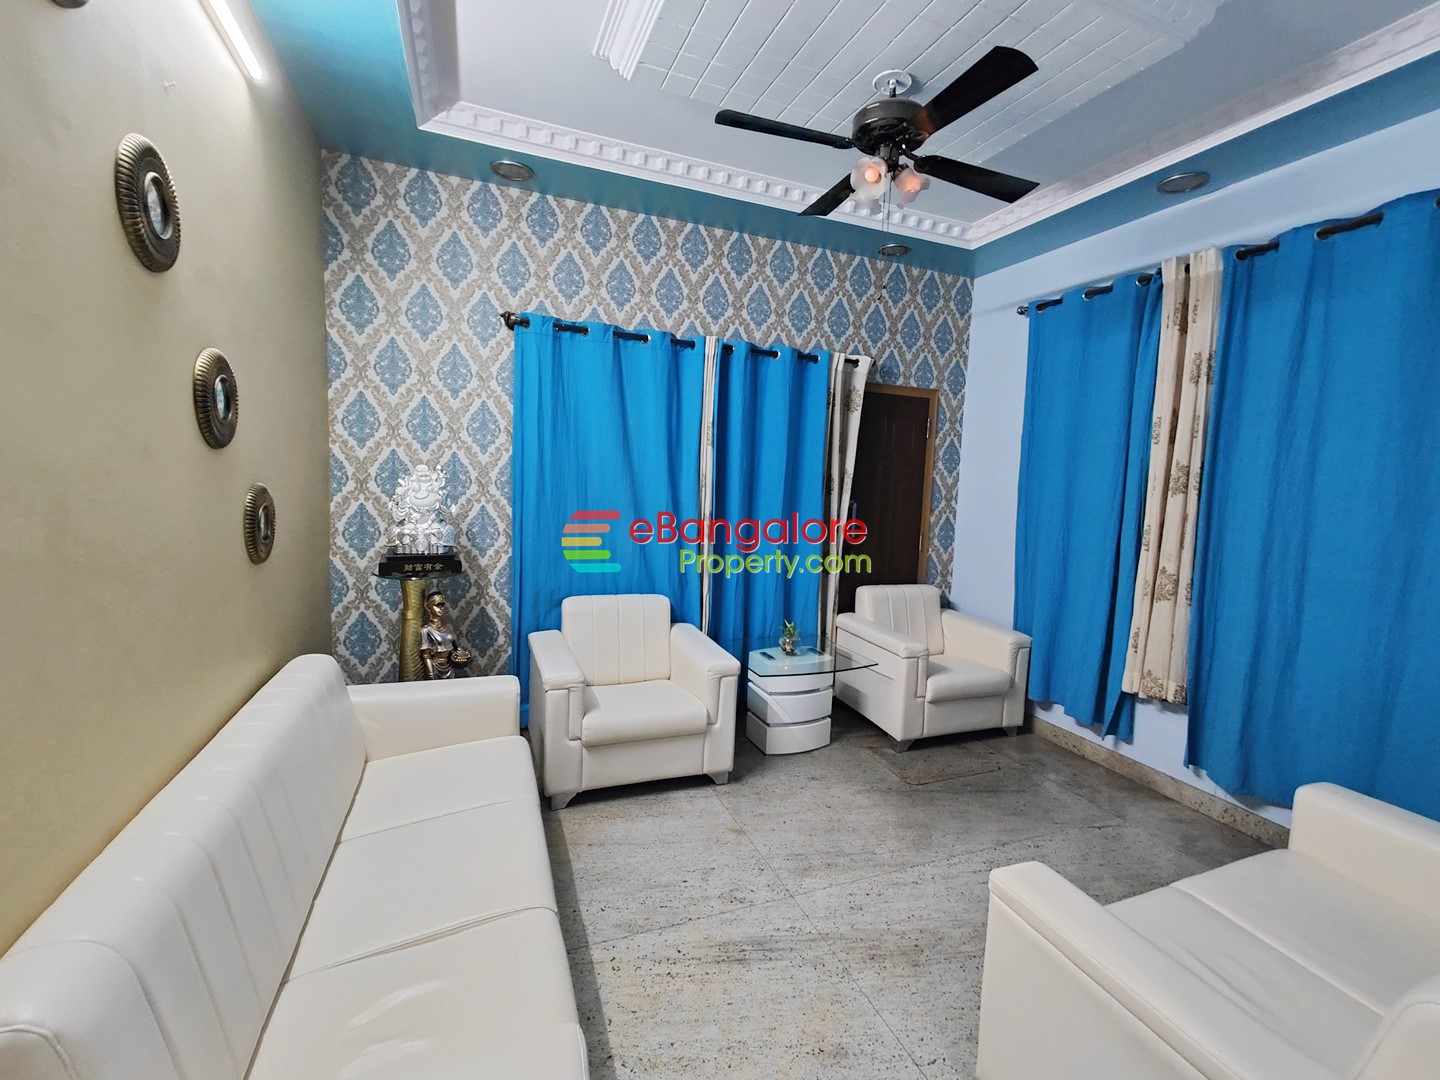 Jayanagar 1st Block Byrasandra – 4BHK Triplex House For Sale on 16×40 Site – With Lift